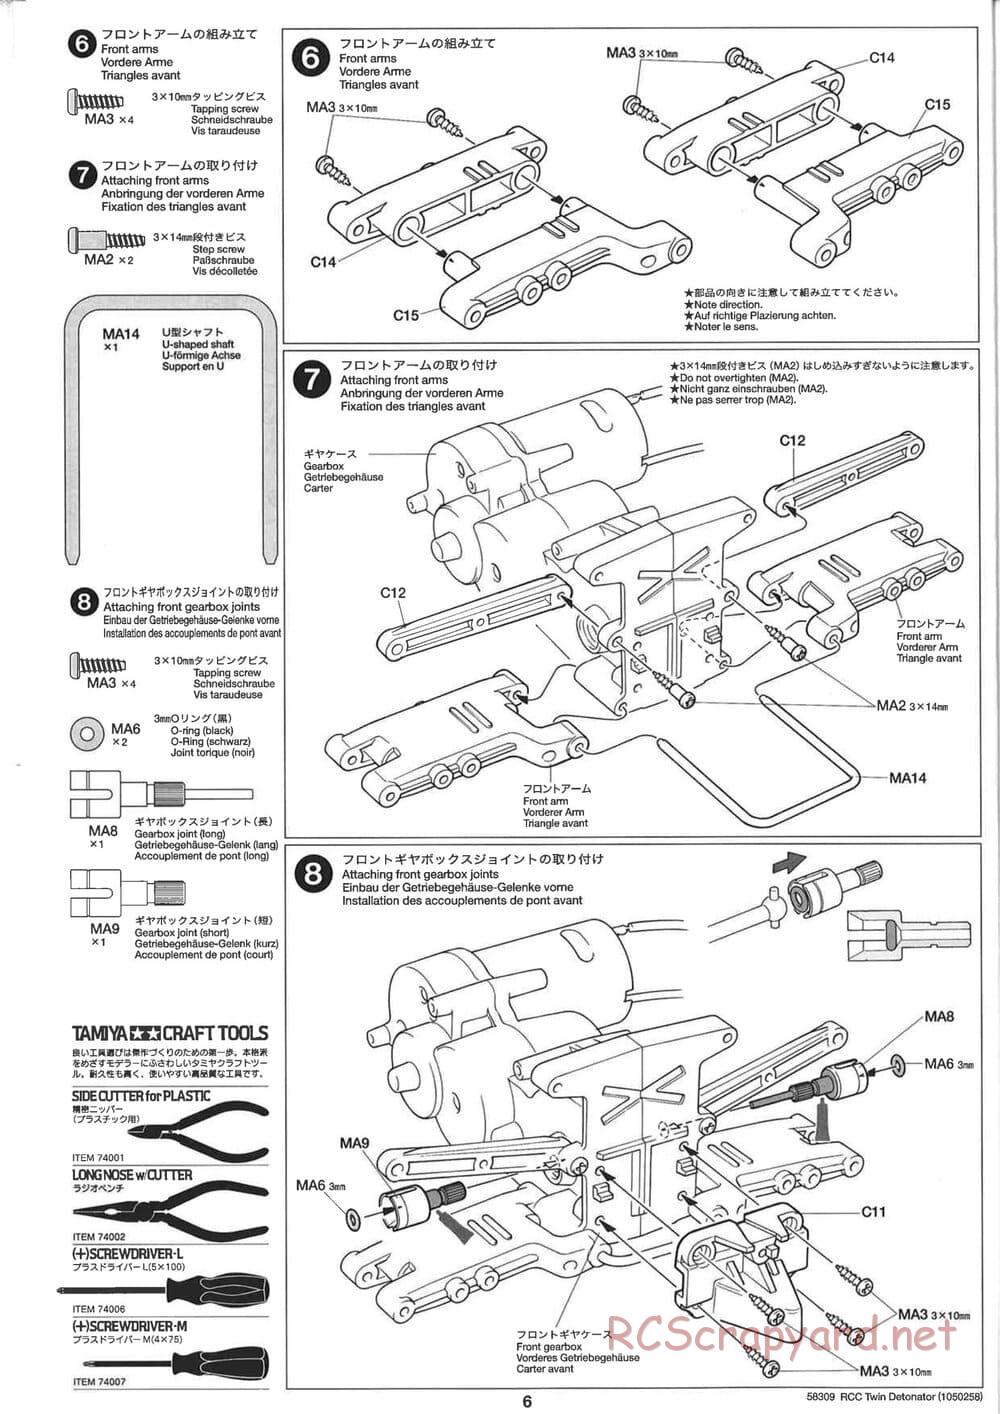 Tamiya - Twin Detonator - WR-01 Chassis - Manual - Page 6